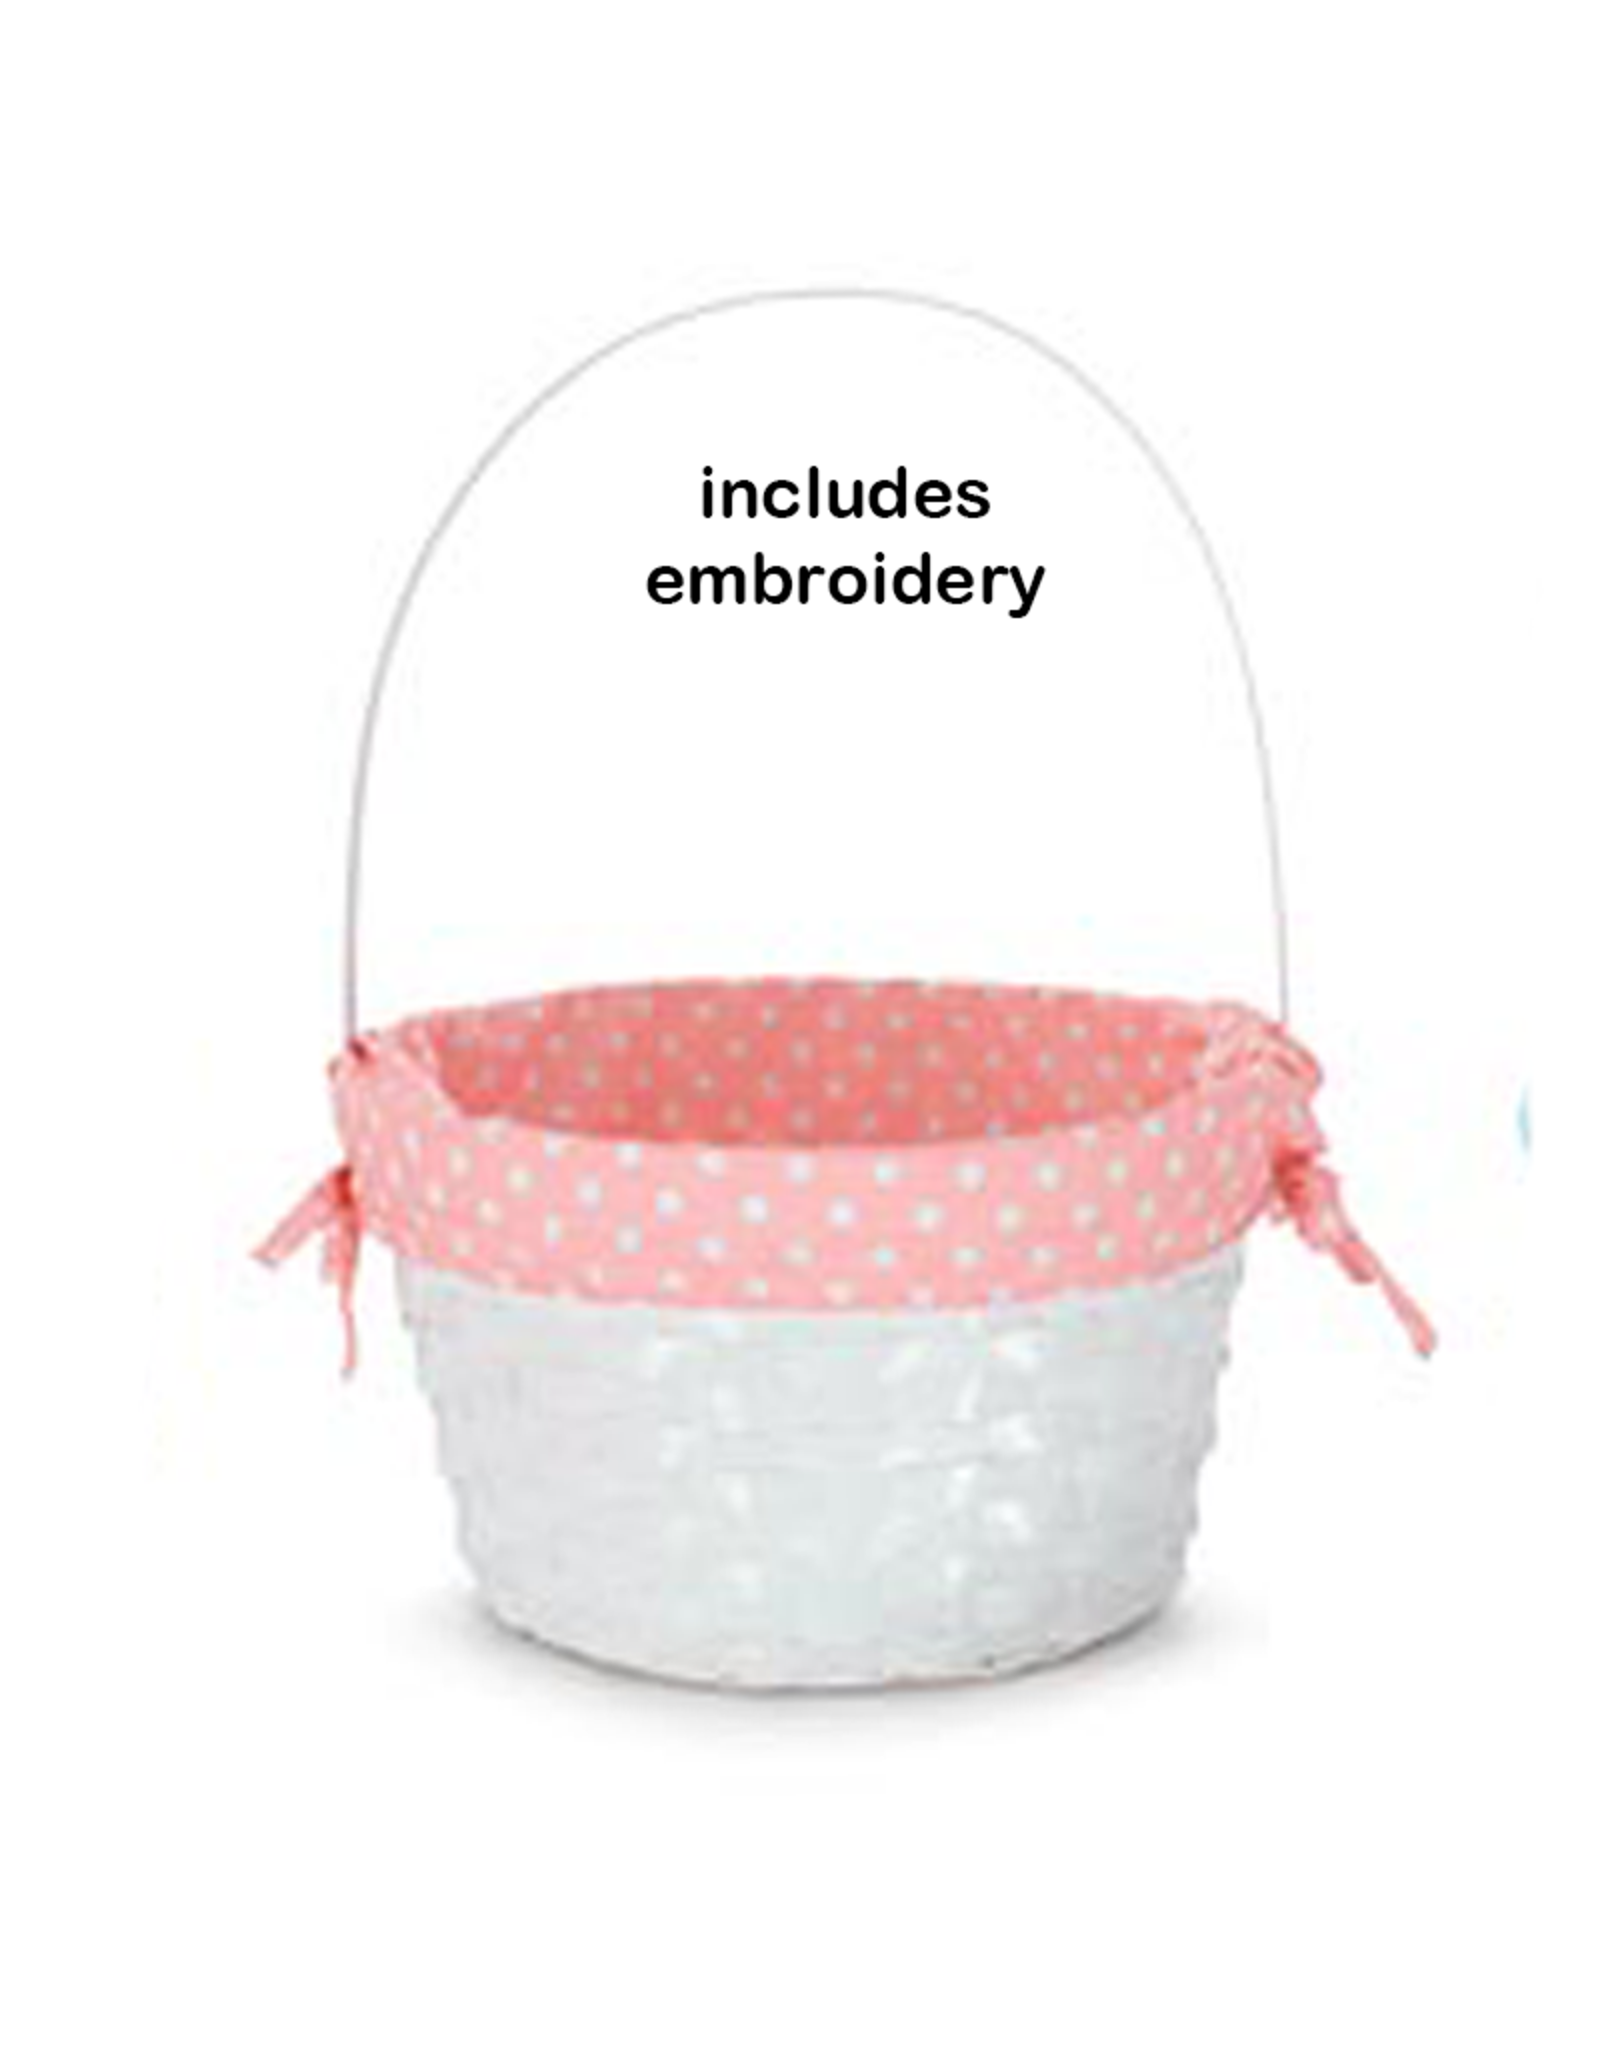 Burton & Burton Lined Easter Basket w/ Embroidery Pink Dot